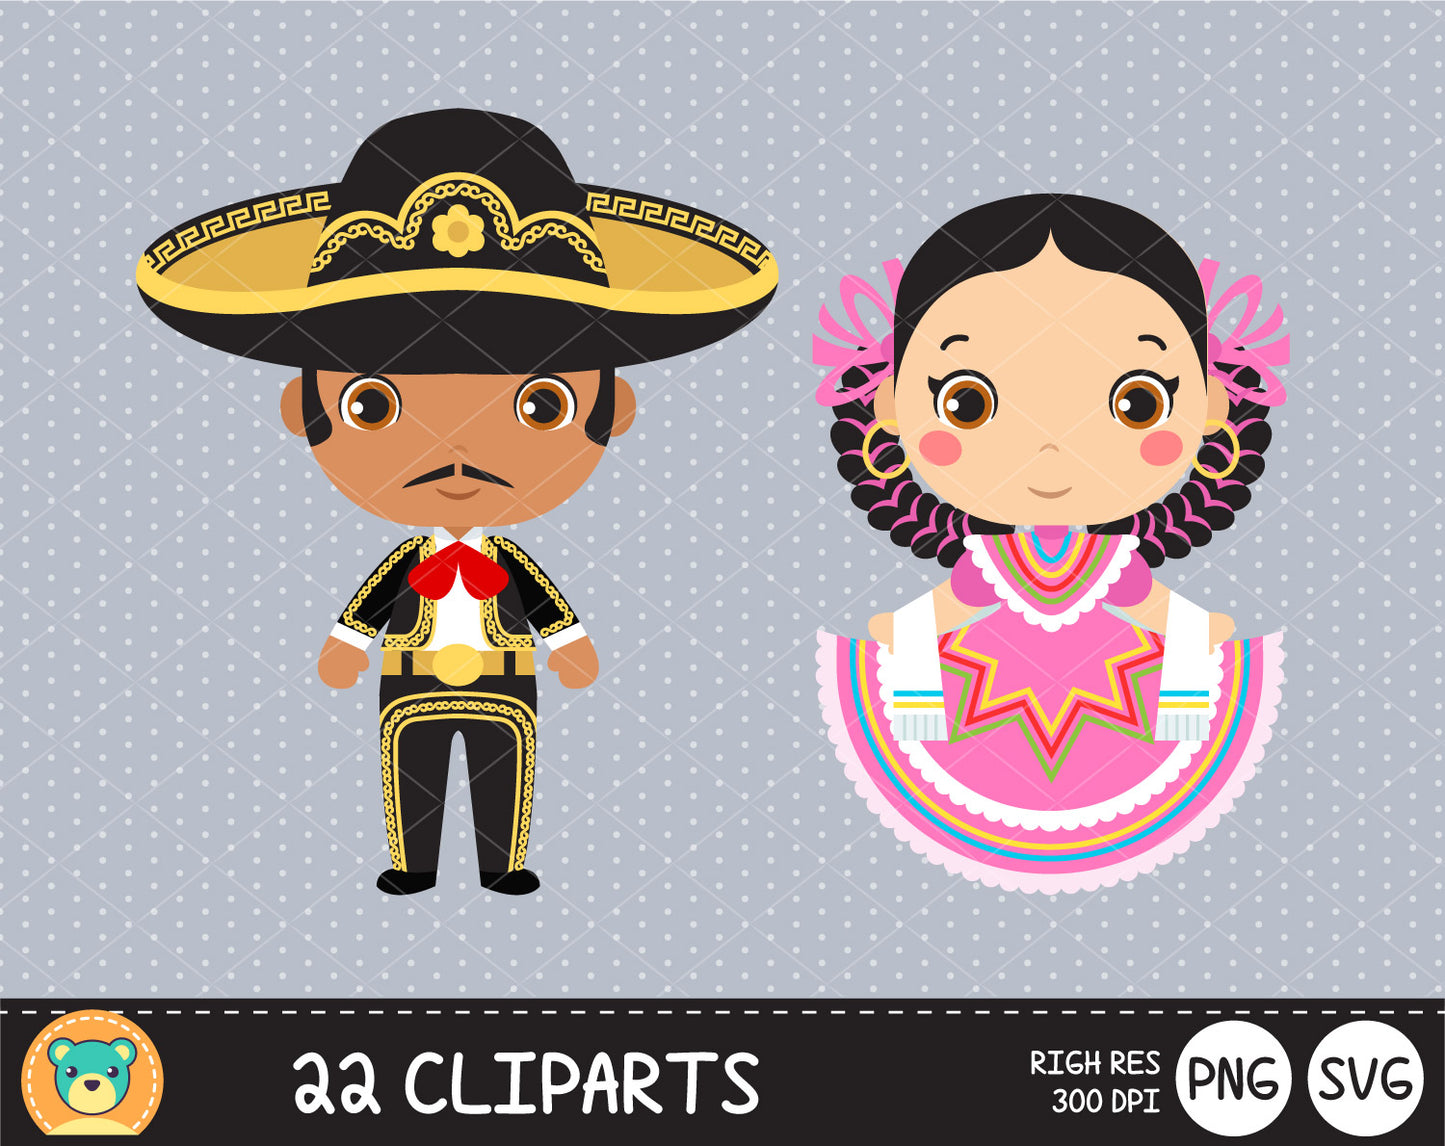 Cute Mexicans clipart set, Digital clip art for decoration, scrapbooking, PNG, SVG, instant download